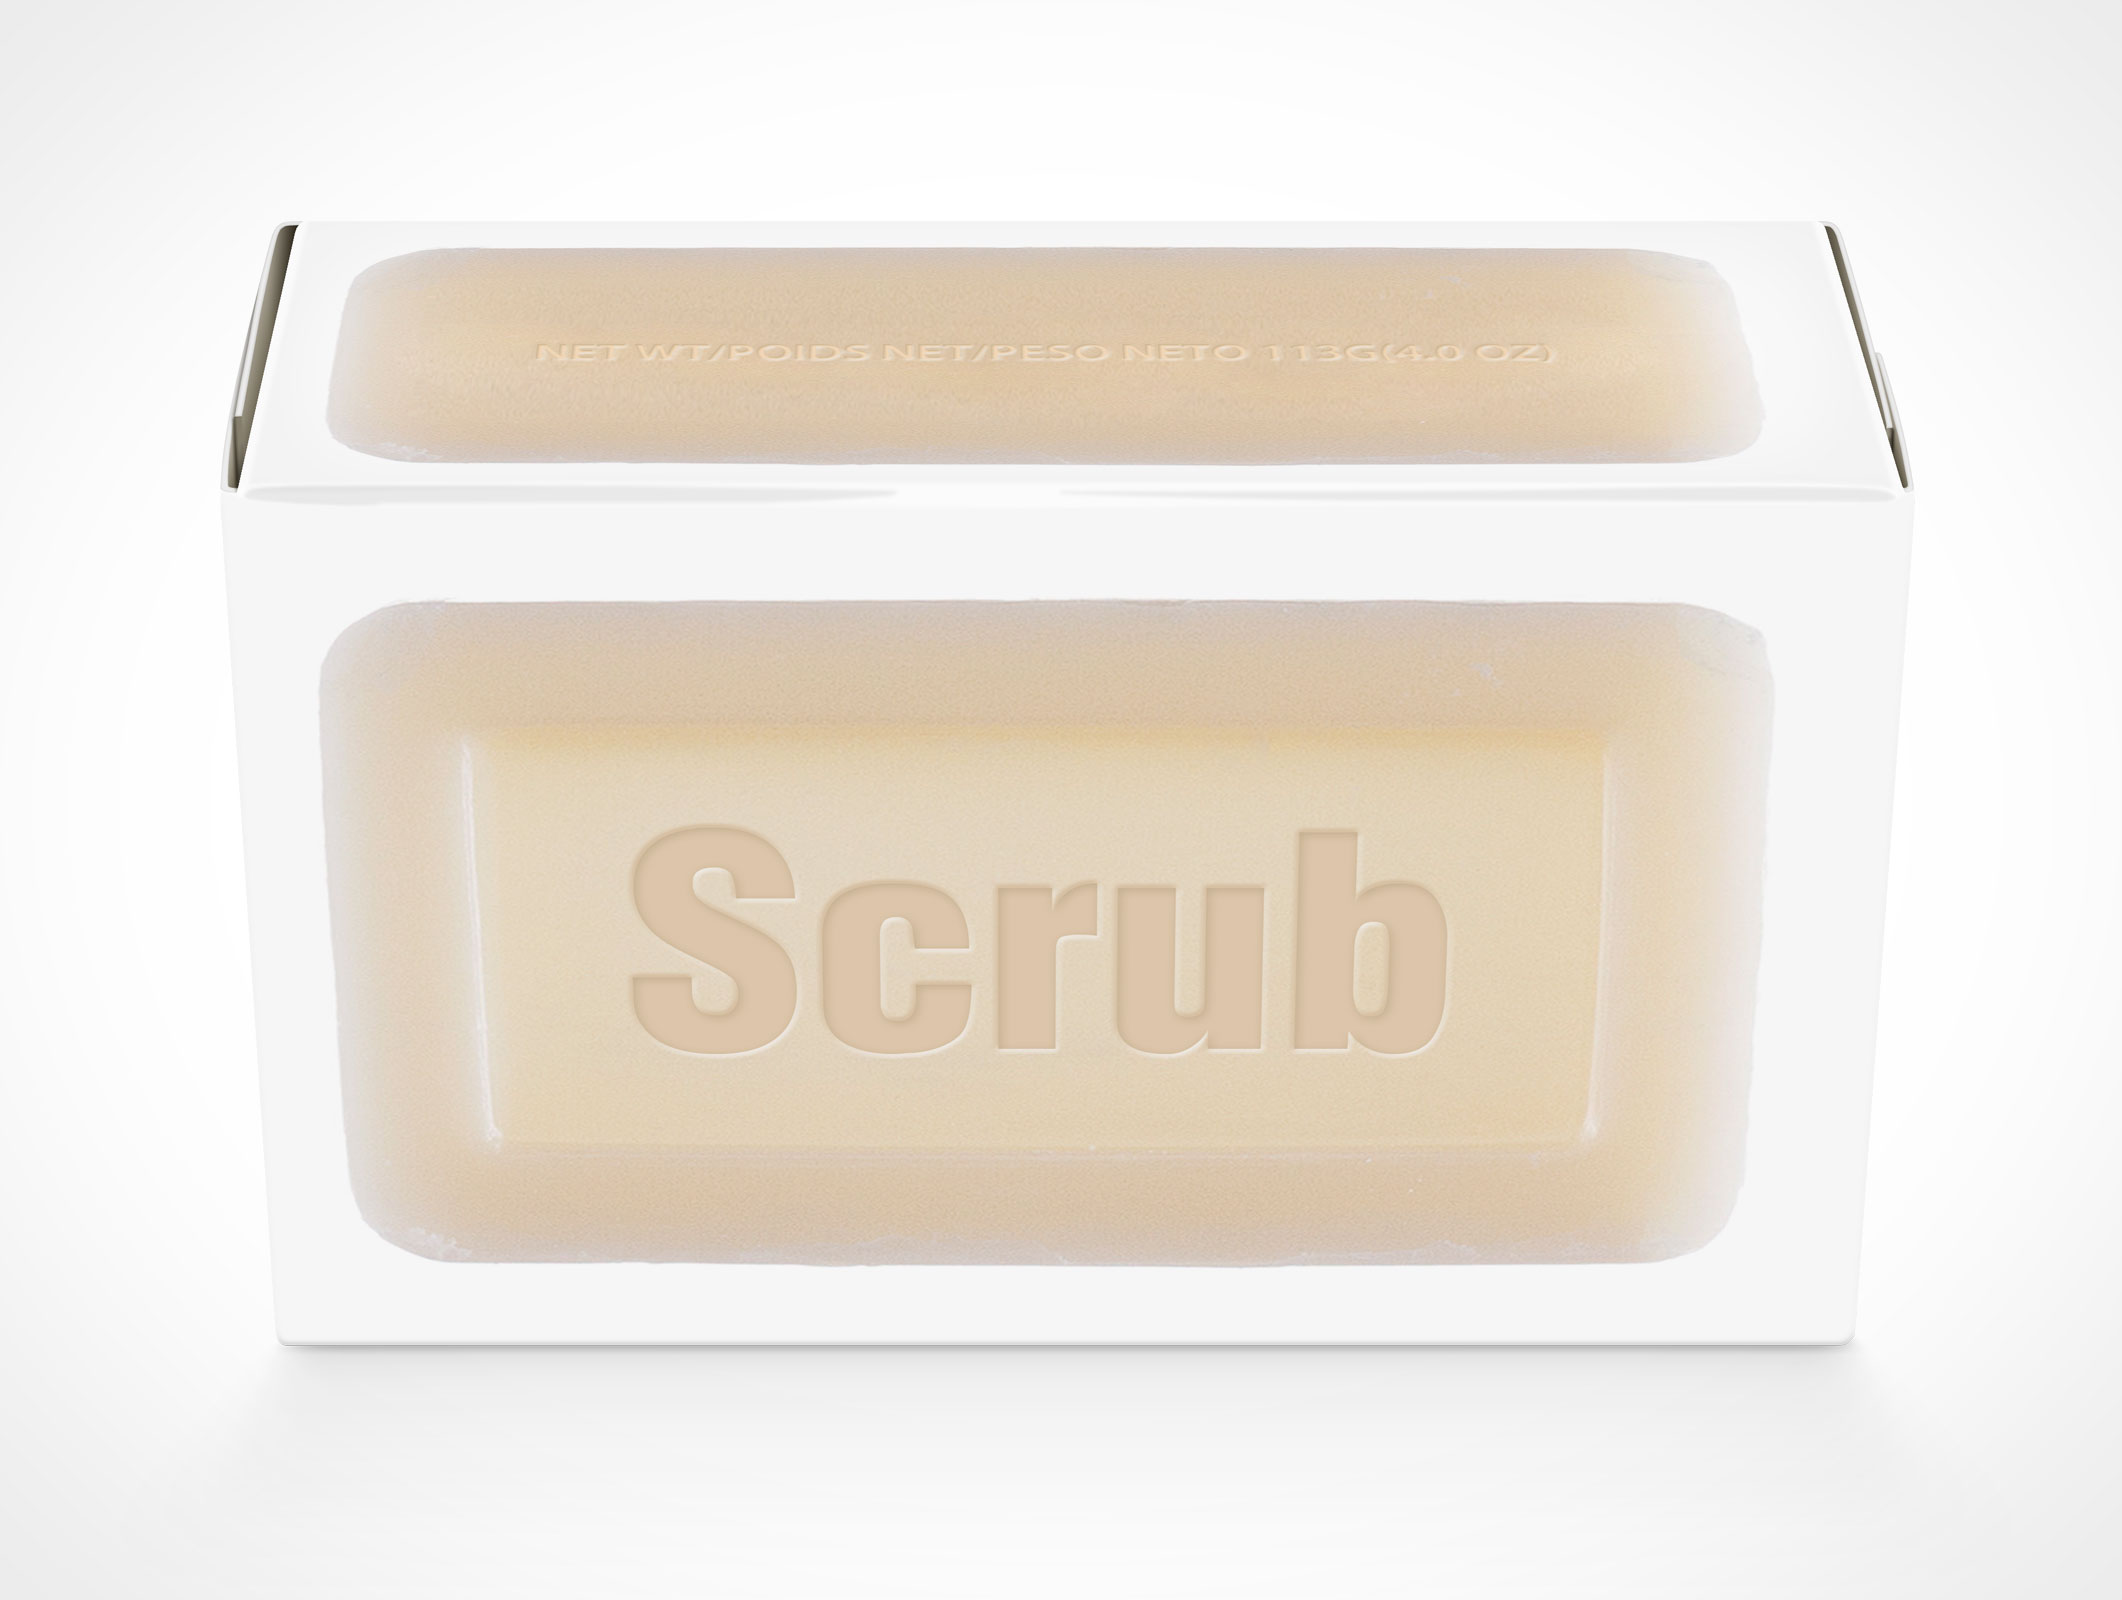 Cosmetic Soap Box Mockup 3r5